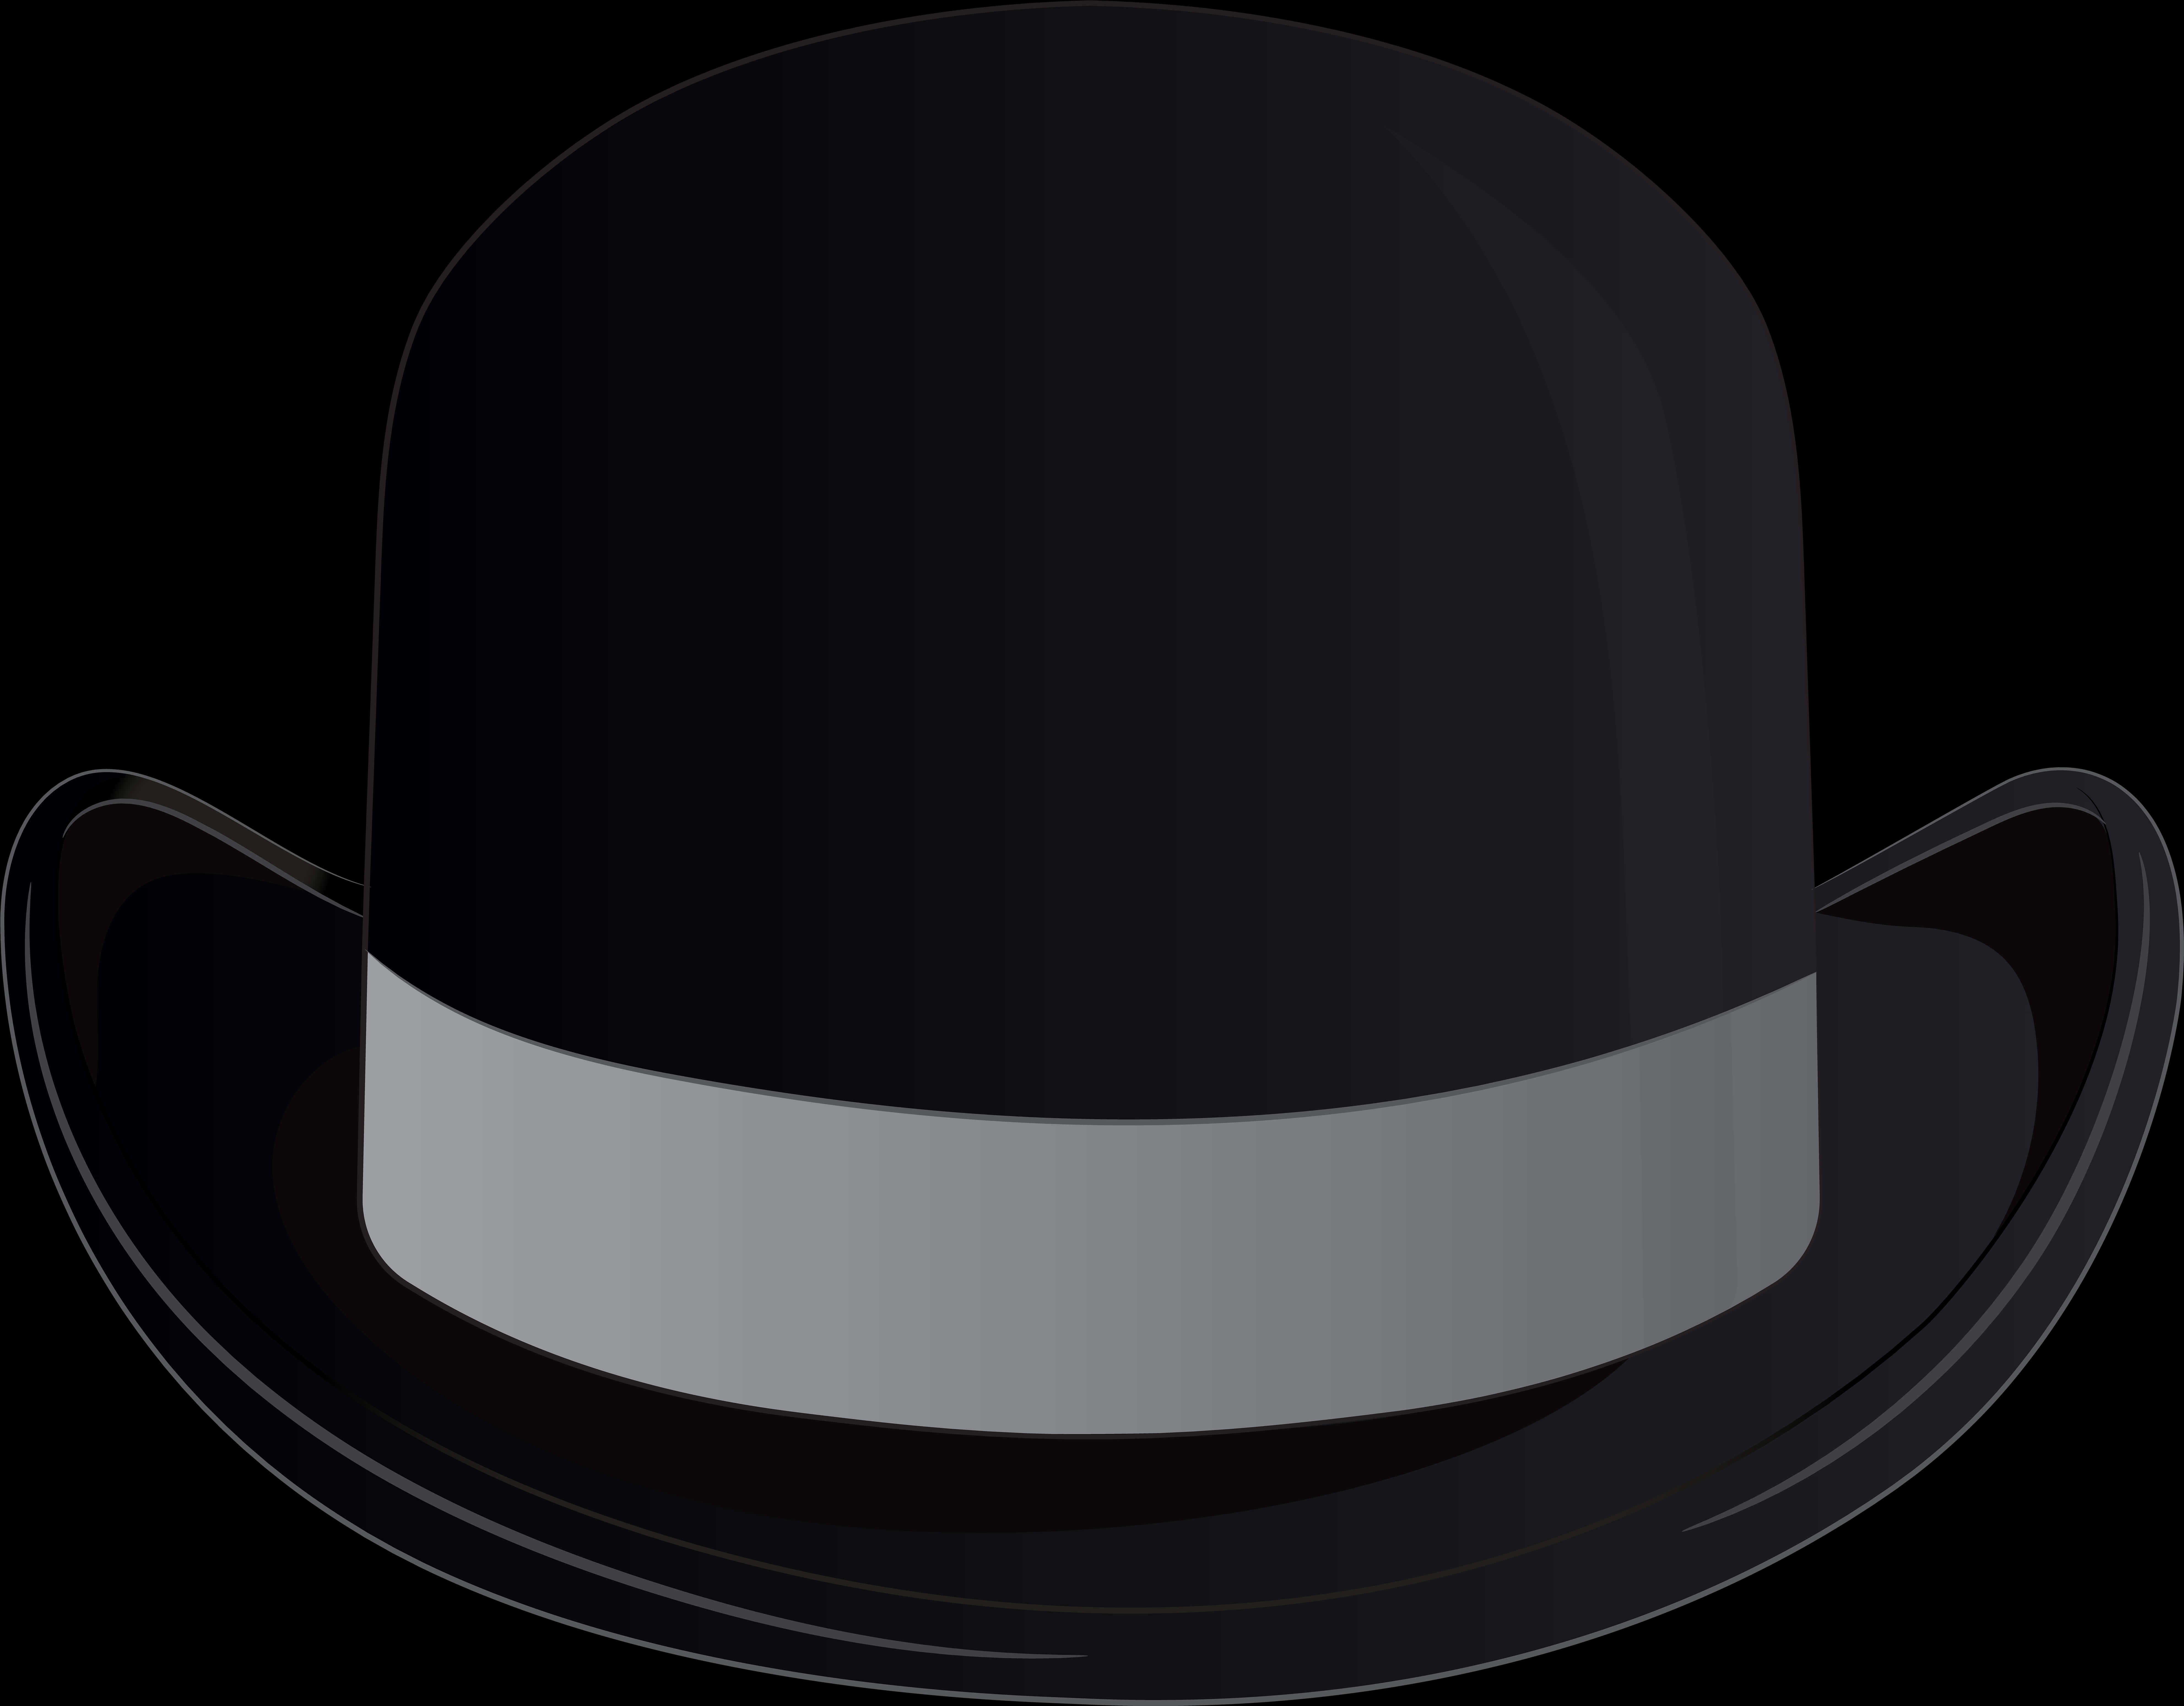 Black Fedora Hat Illustration